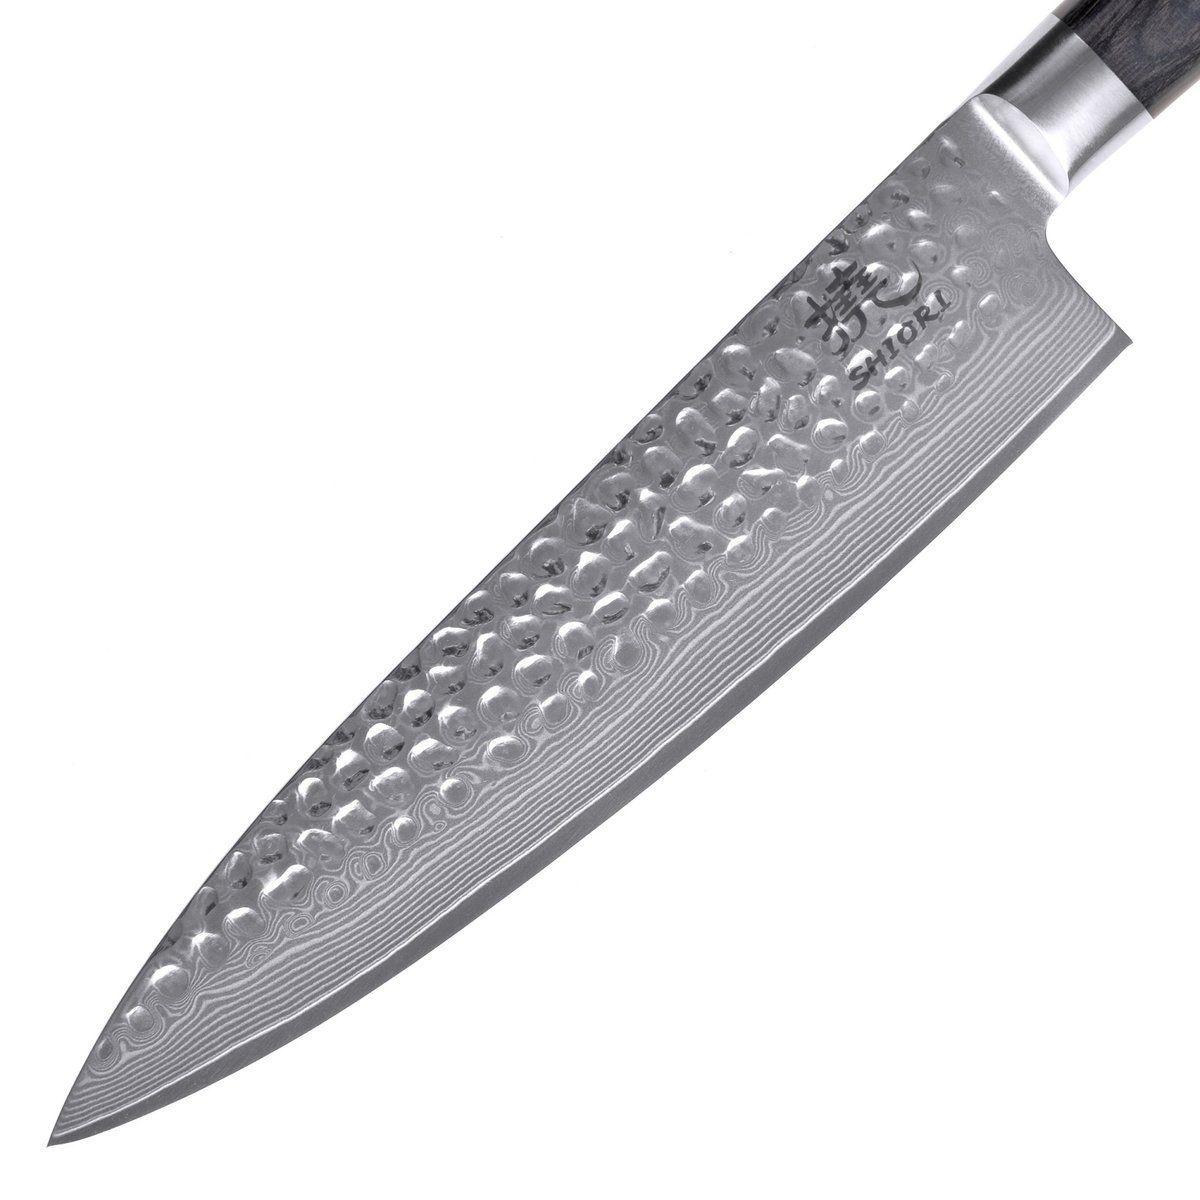 Profesjonalny nóż szefa kuchni Shiori Chairo Sifu